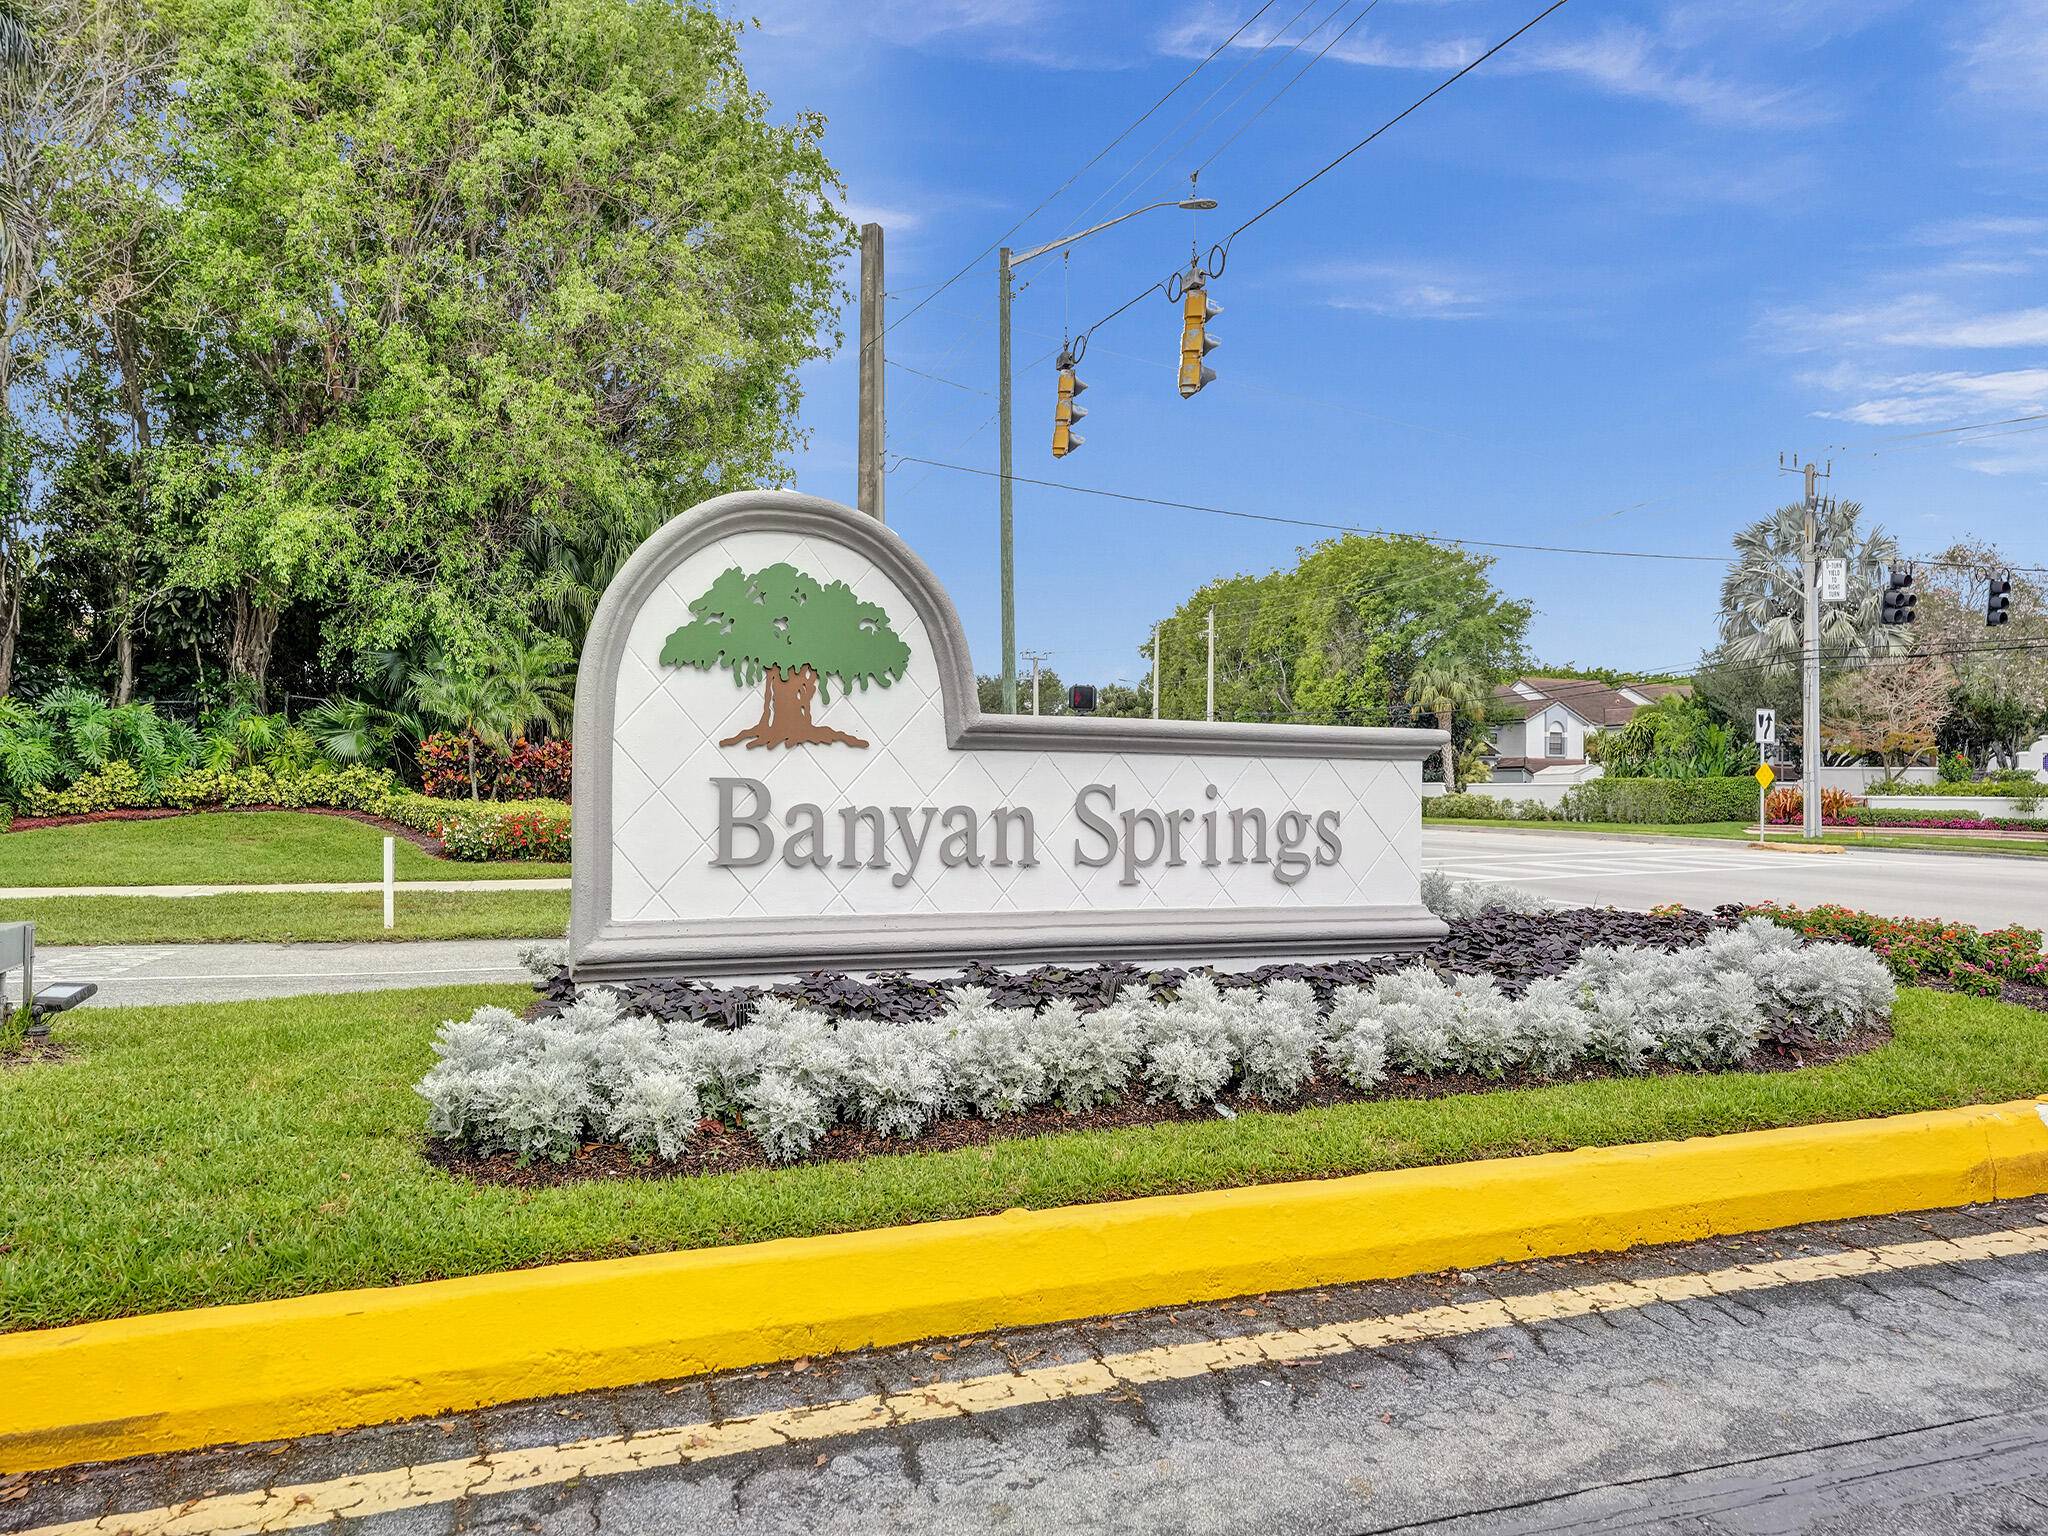 Make Banyan Springs your home.